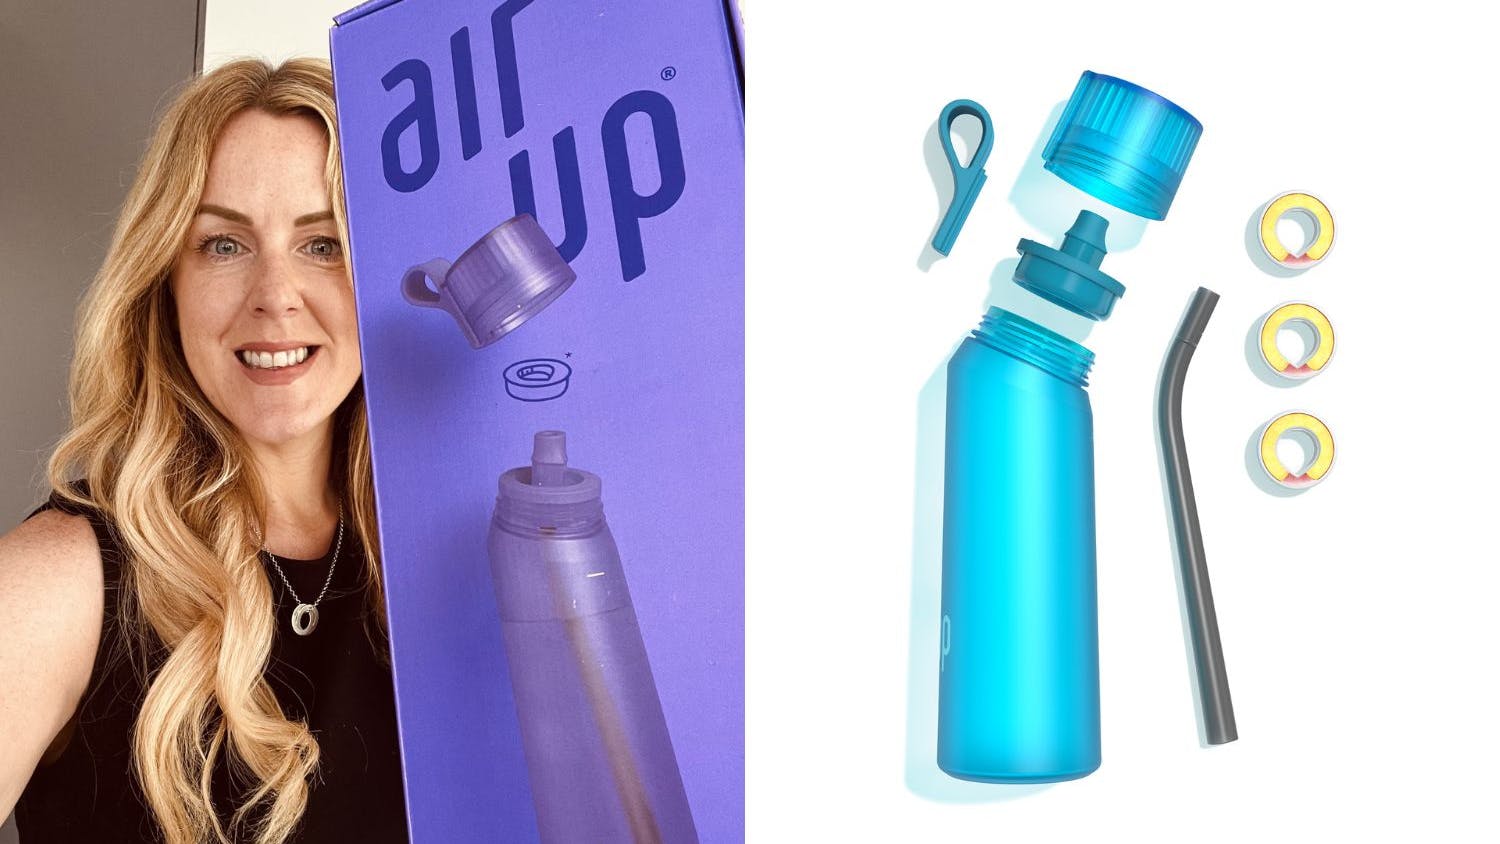  Alpha Fit Flavored Water Bottle, Blue Water Bottle, Air Up  Water Bottle